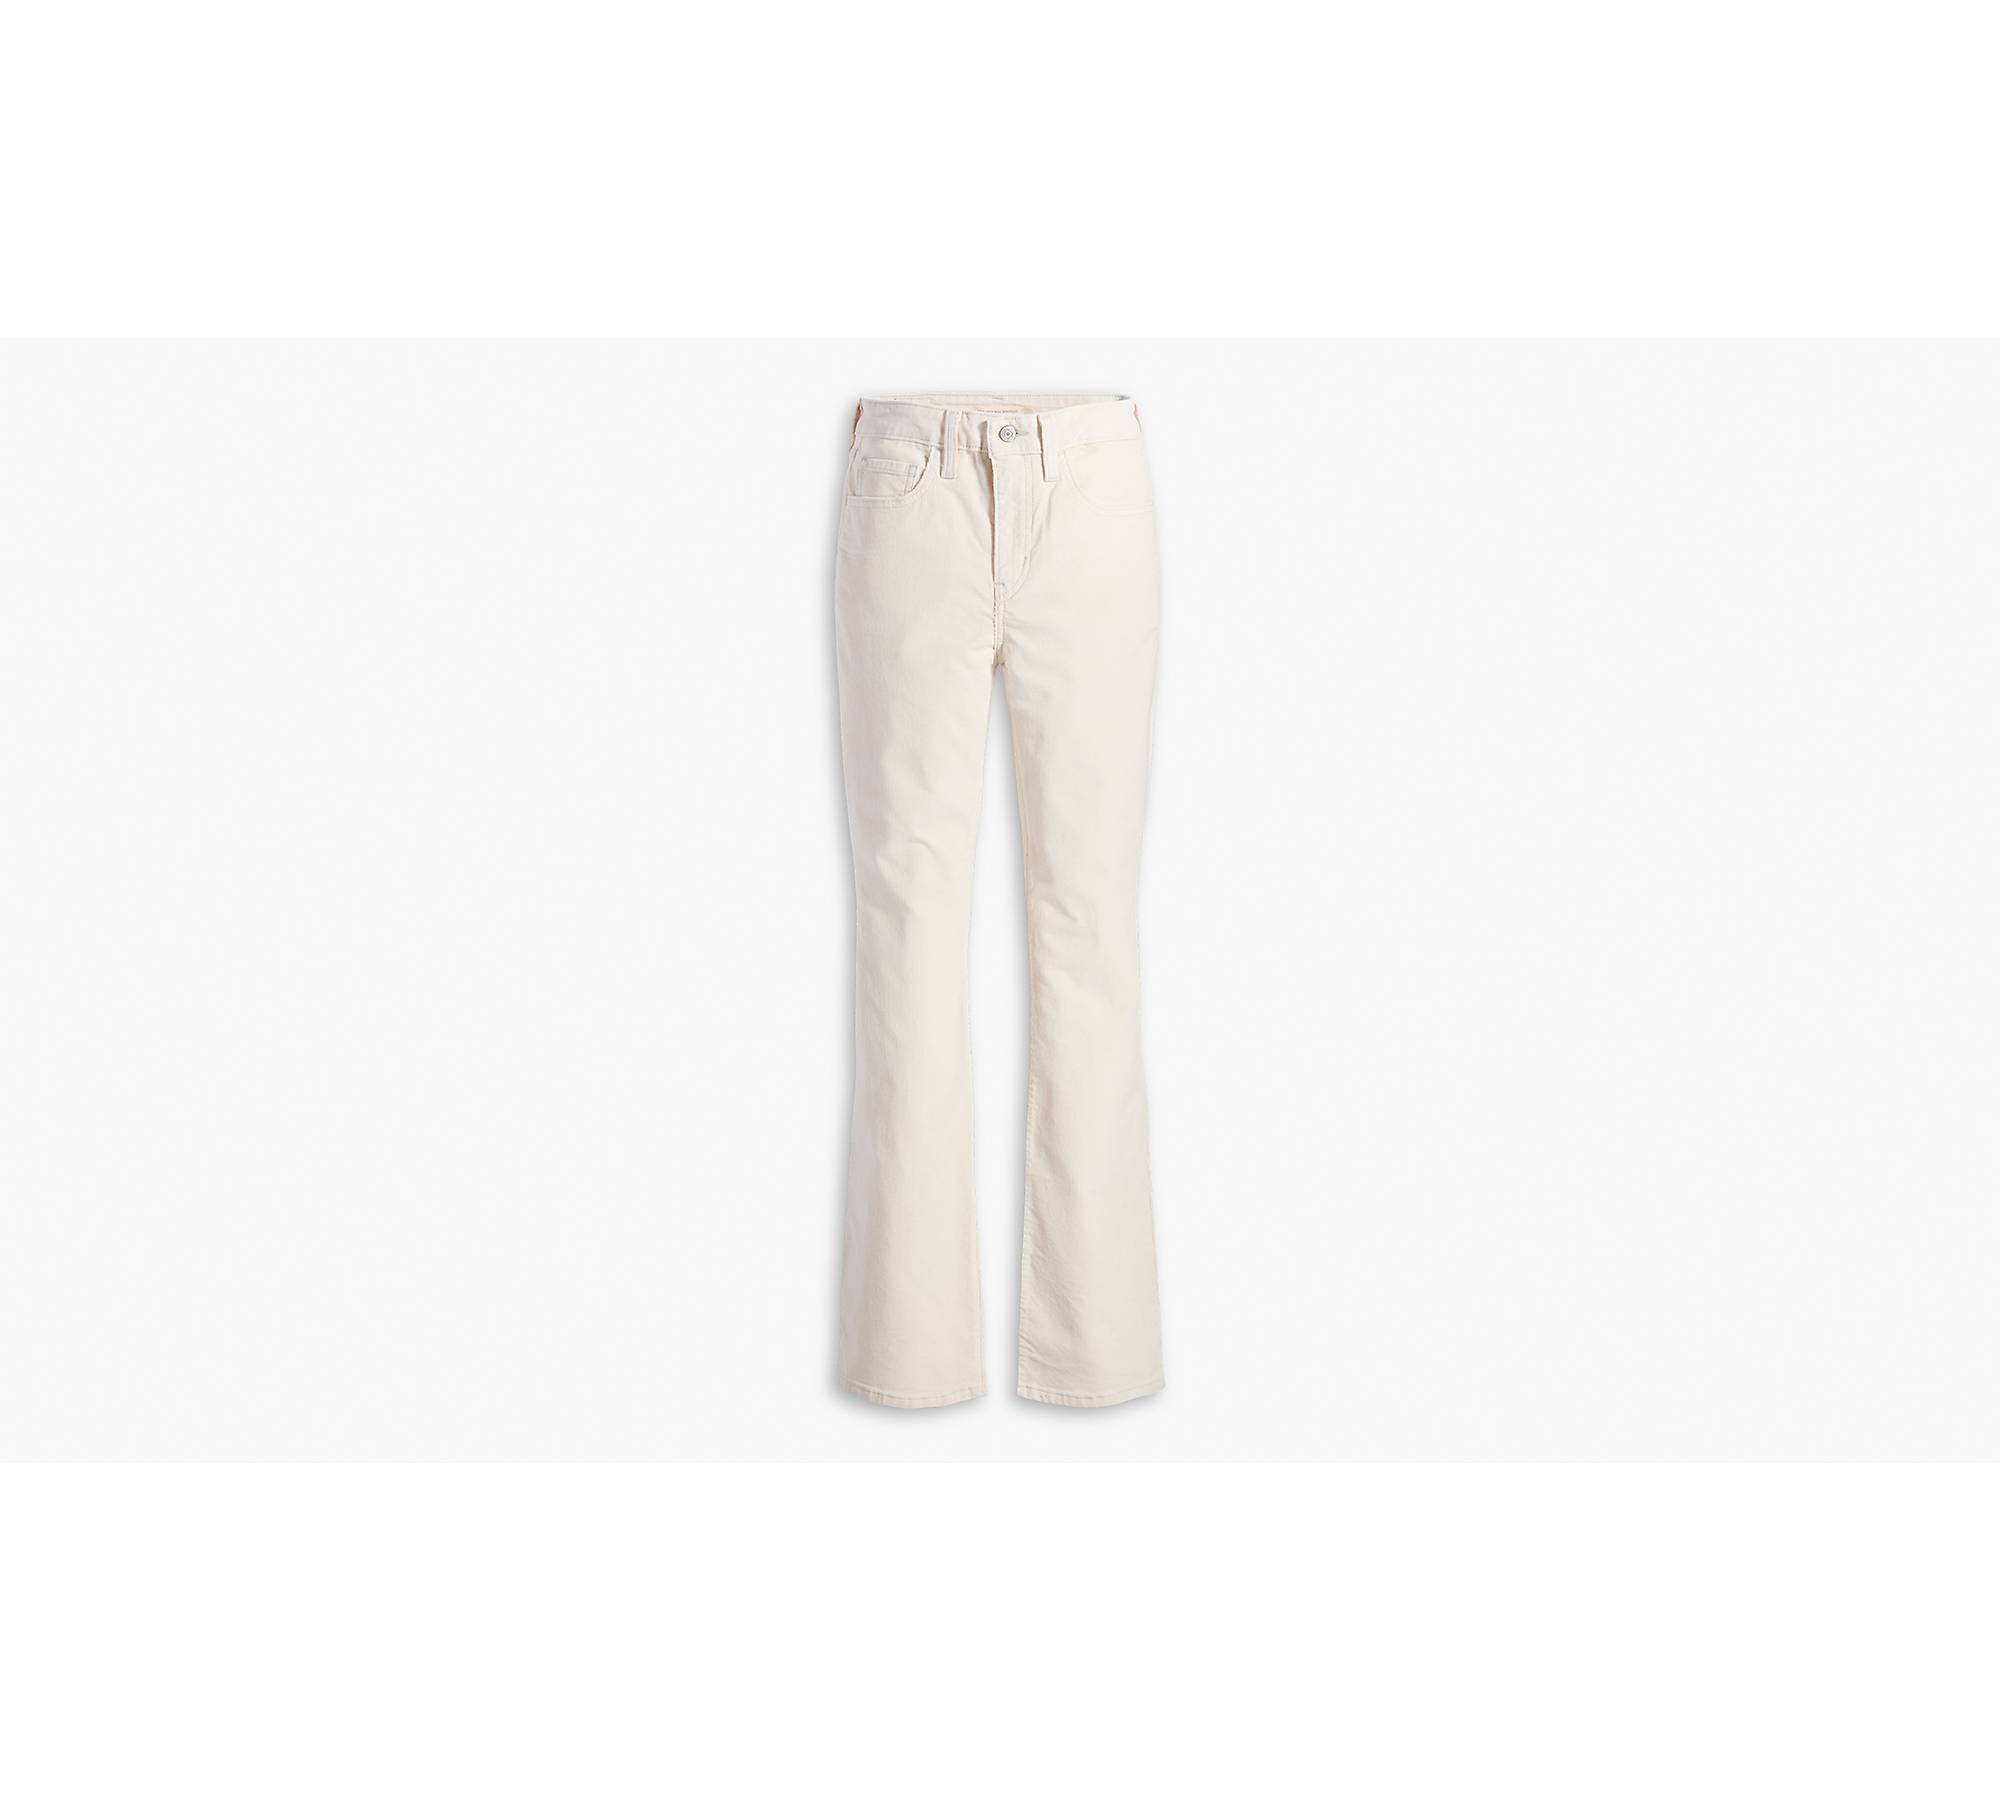 Women's High-rise Corduroy Bootcut Jeans - Universal Thread